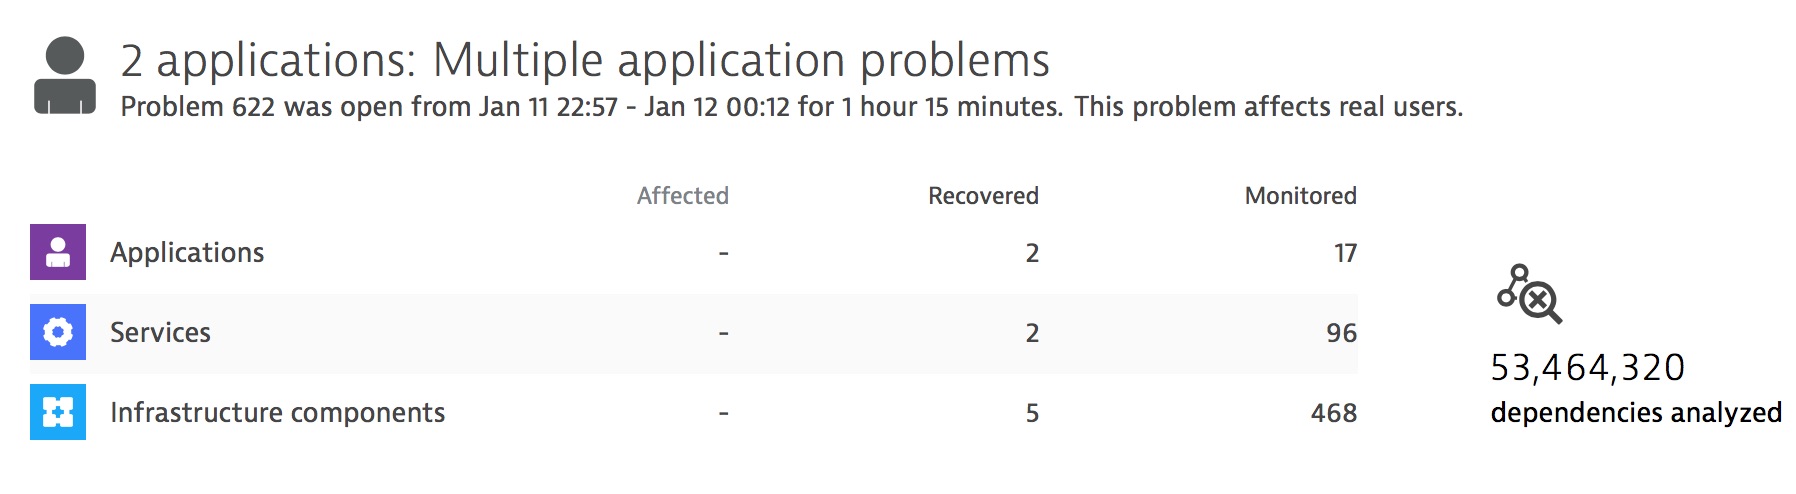 Multiple applications problems screenshot